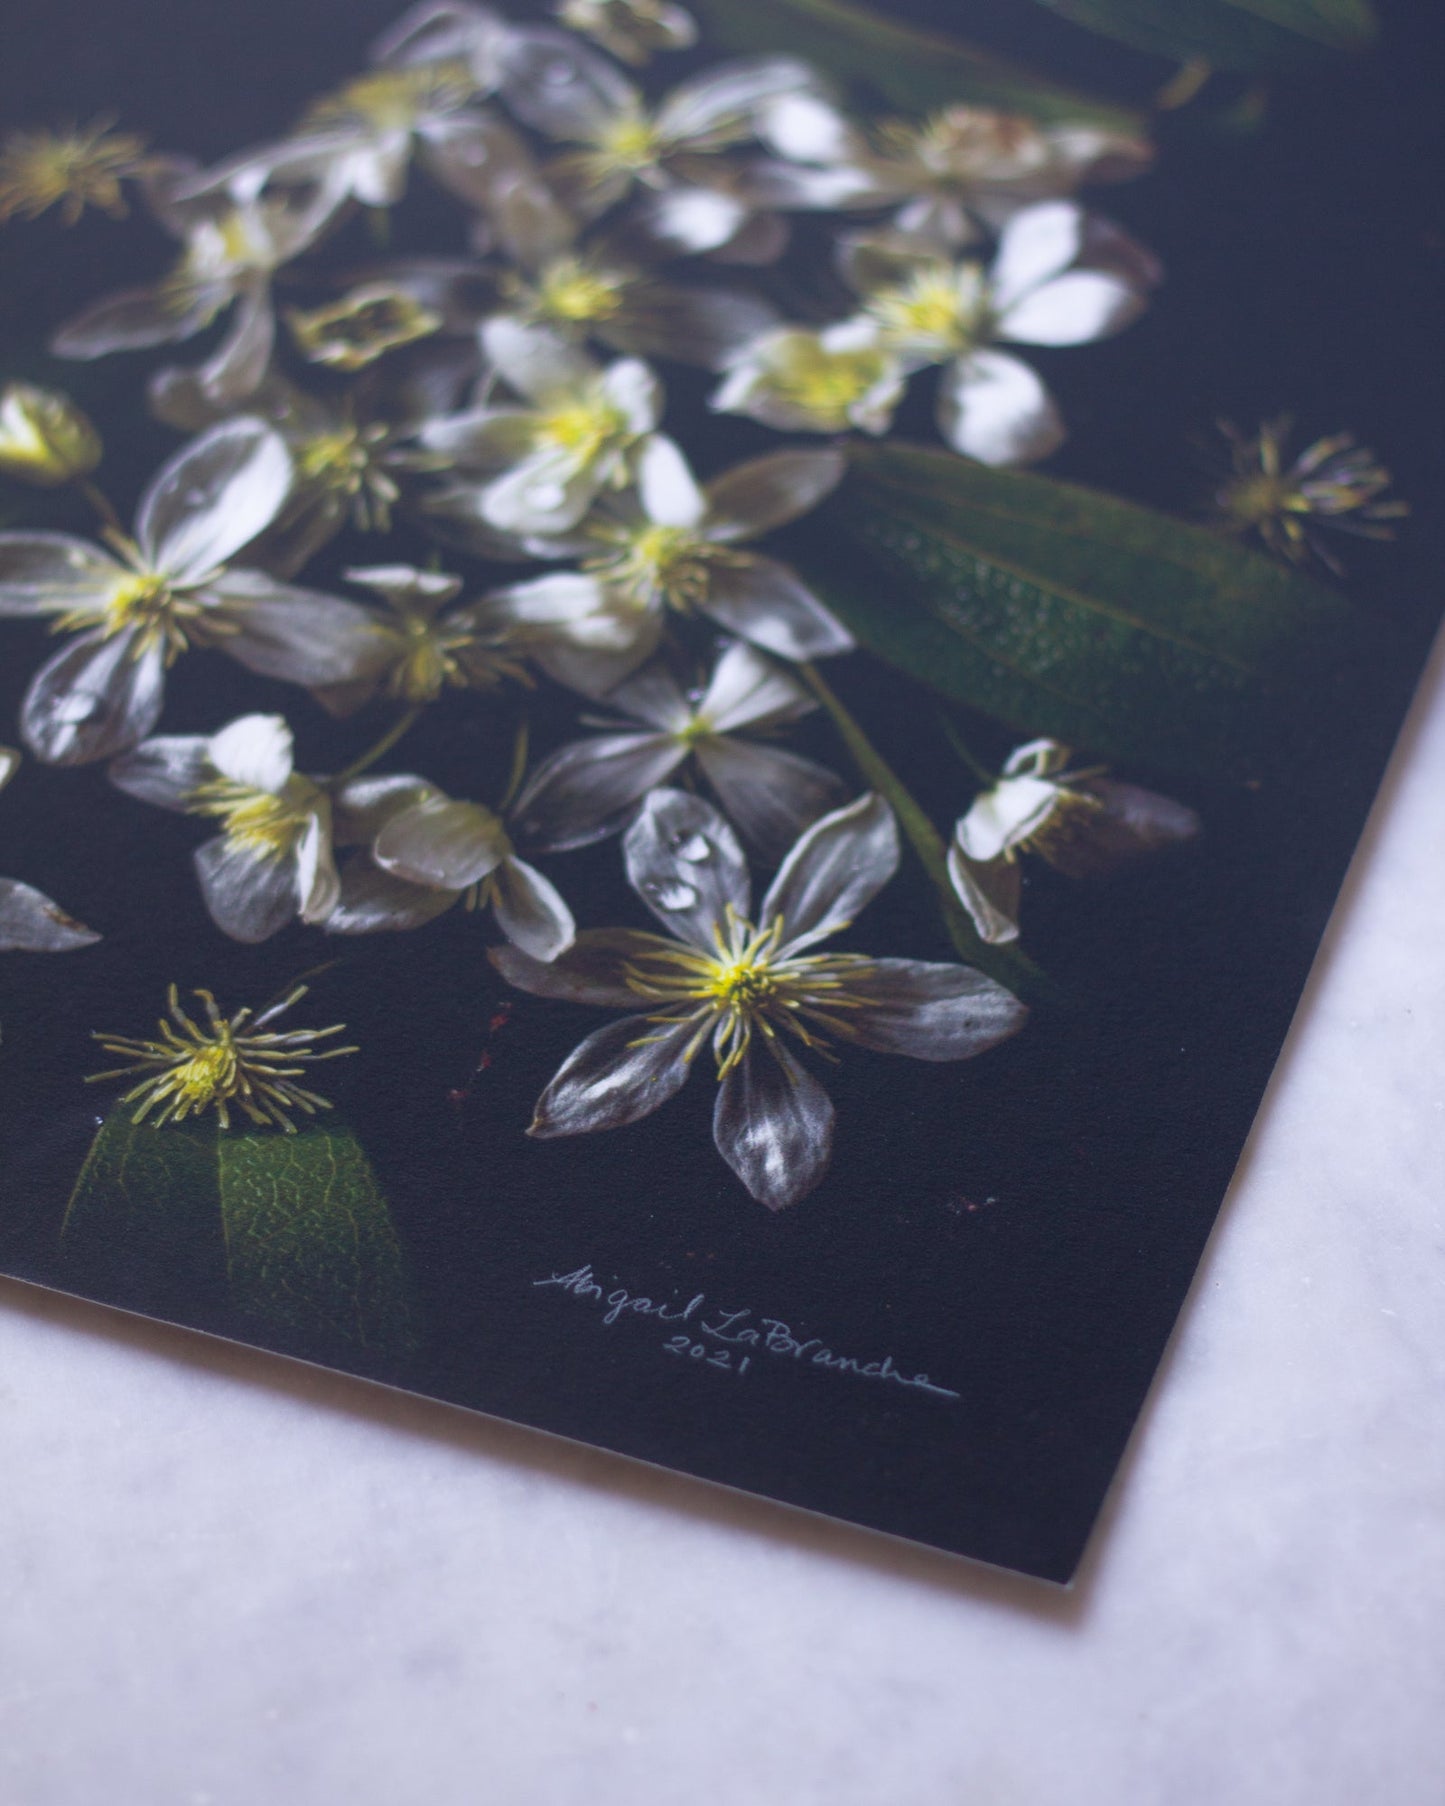 Clover & Elm Flora Constellation Limited Edition Print